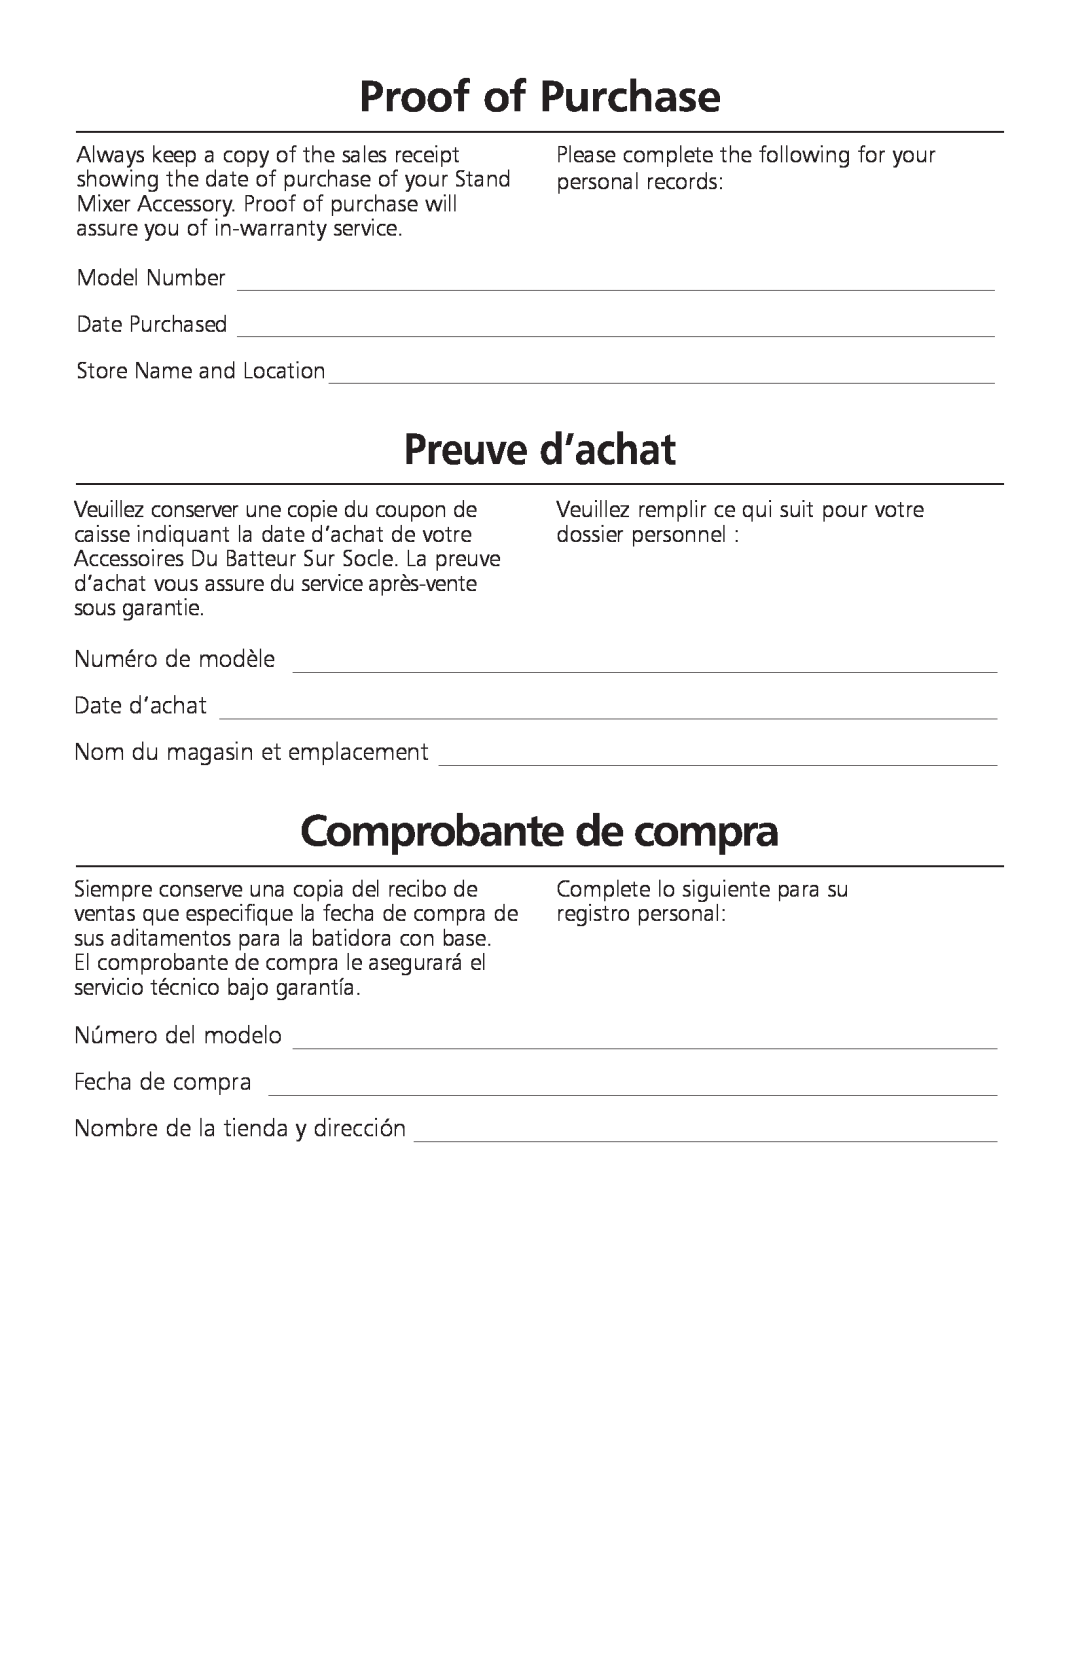 KitchenAid W10236413B manual Proof of Purchase, Preuve d’achat, Comprobante de compra 